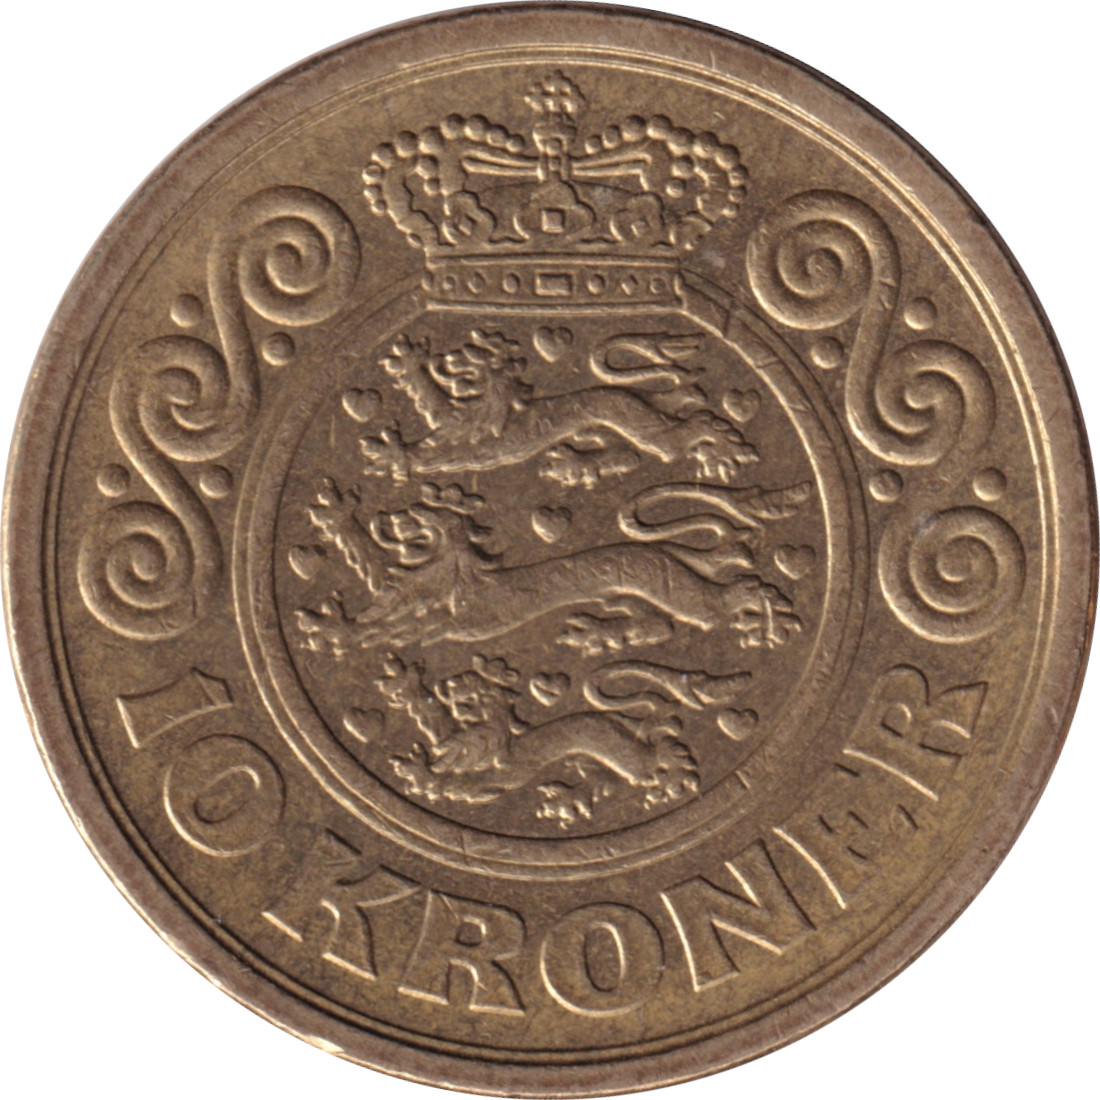 10 kroner - Margrethe II - Tête agée - Premières armoiries